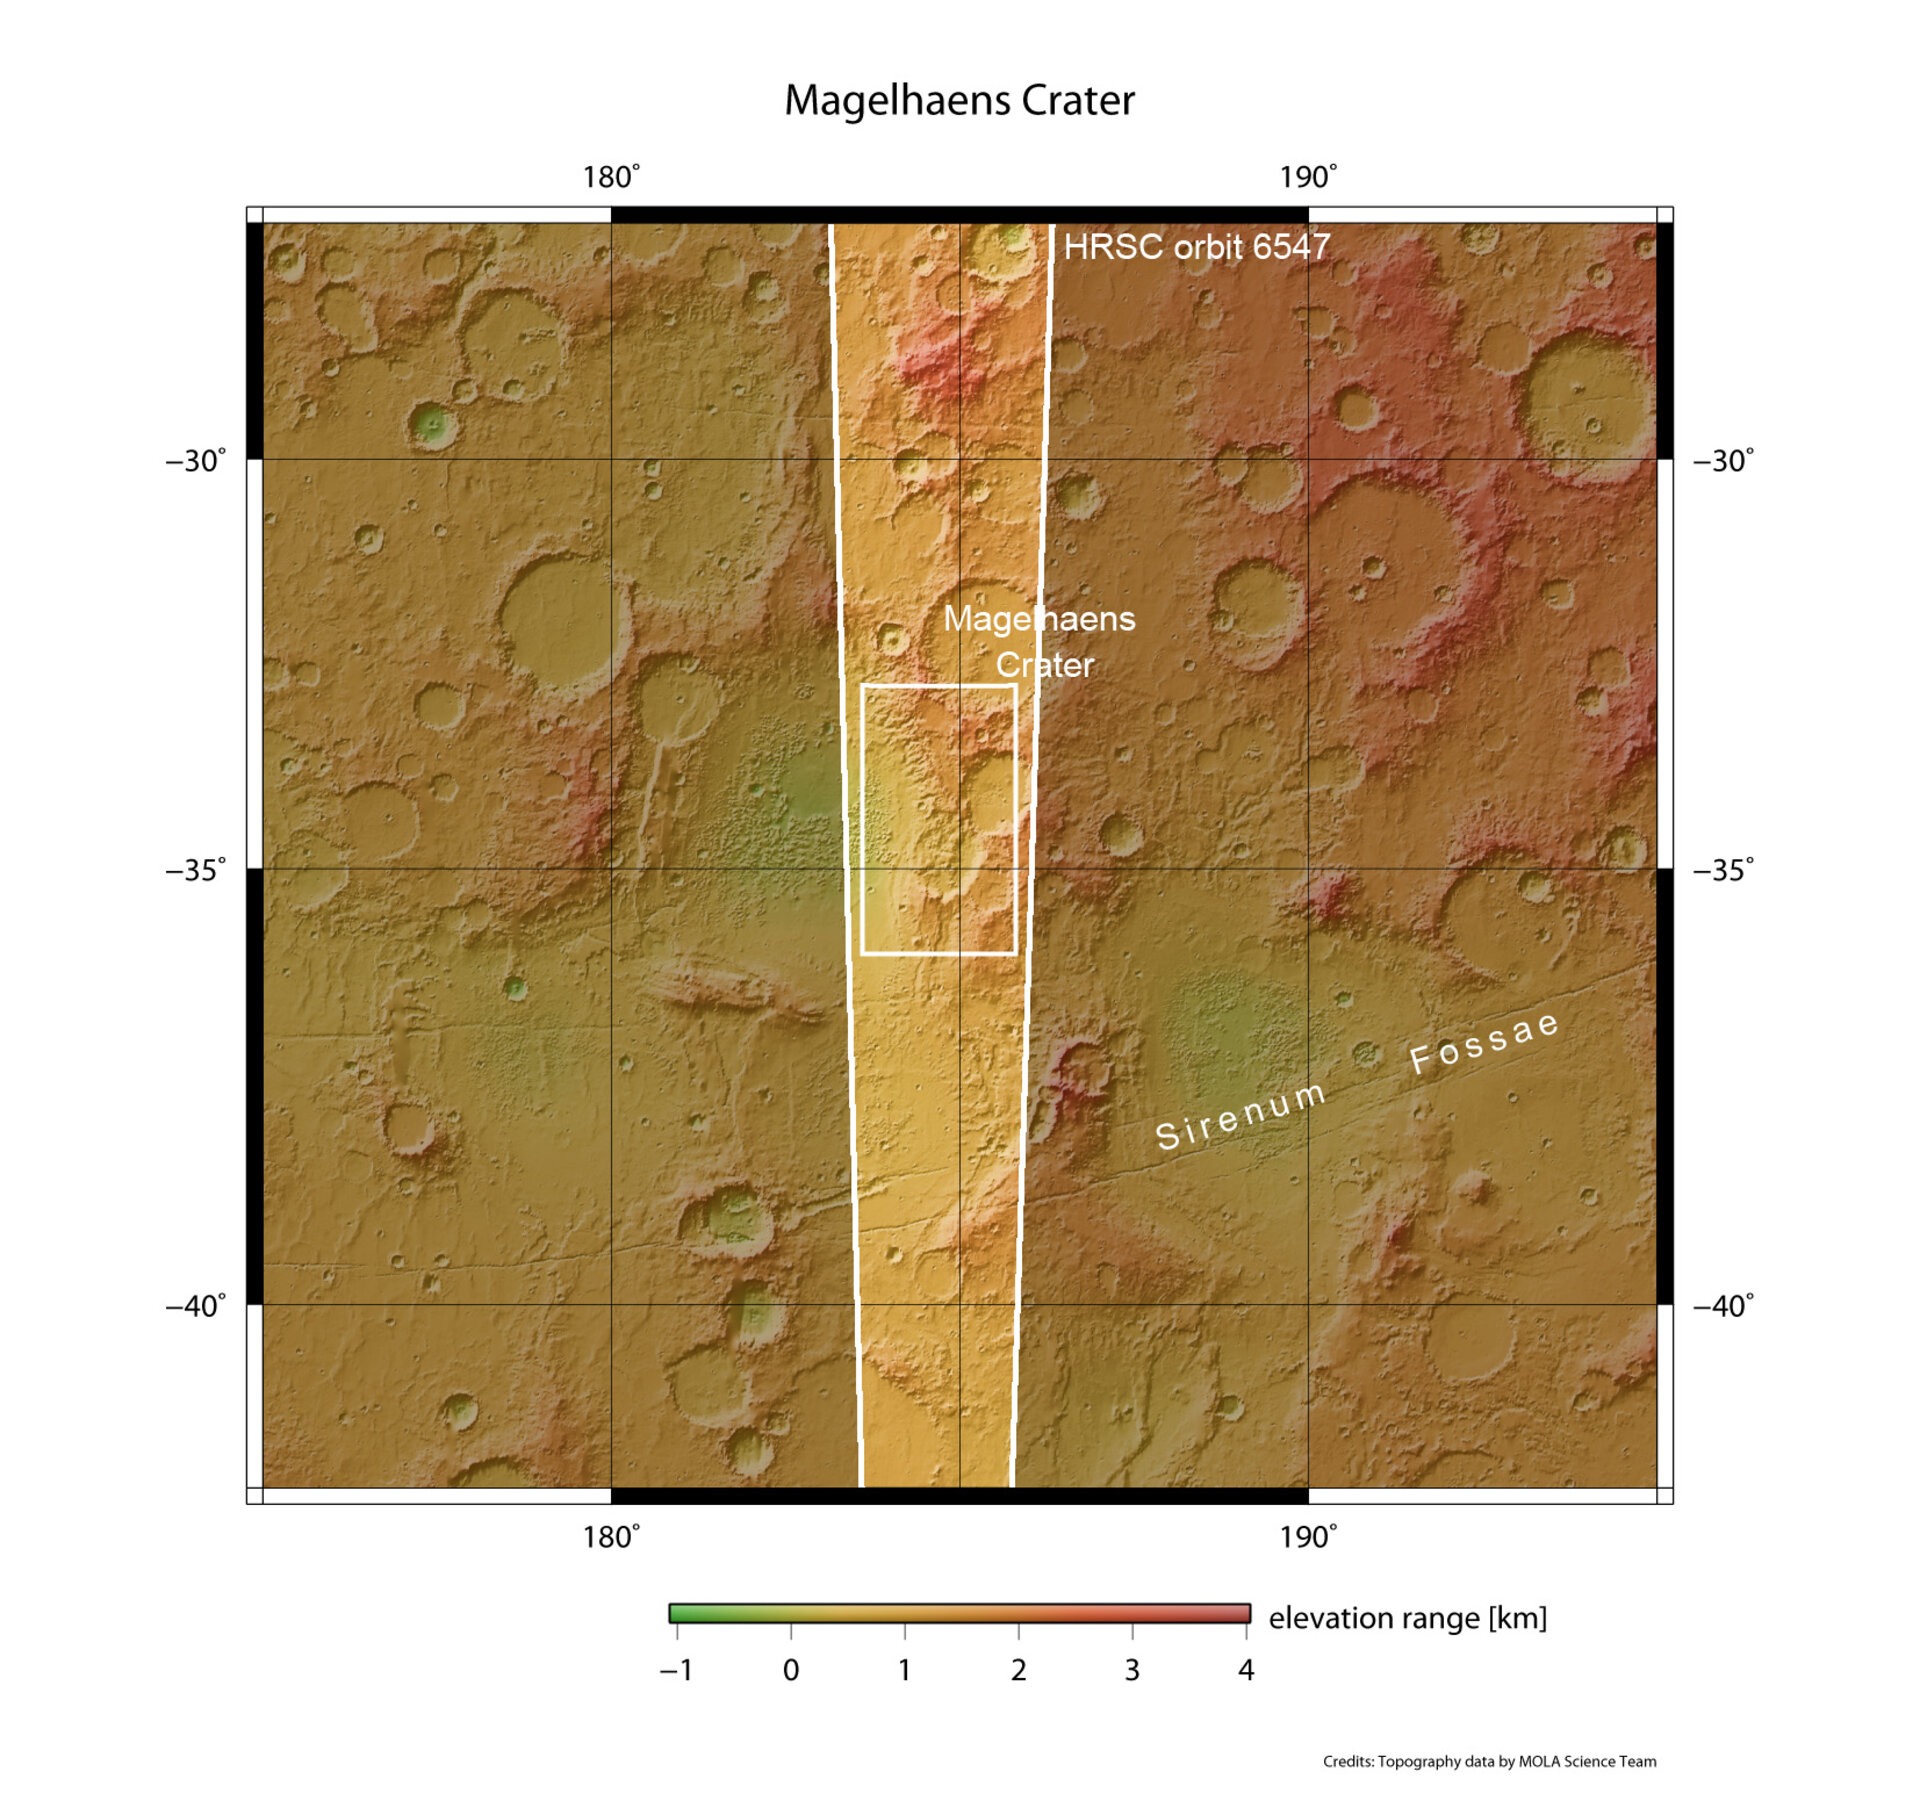 Magellan Crater shown in context